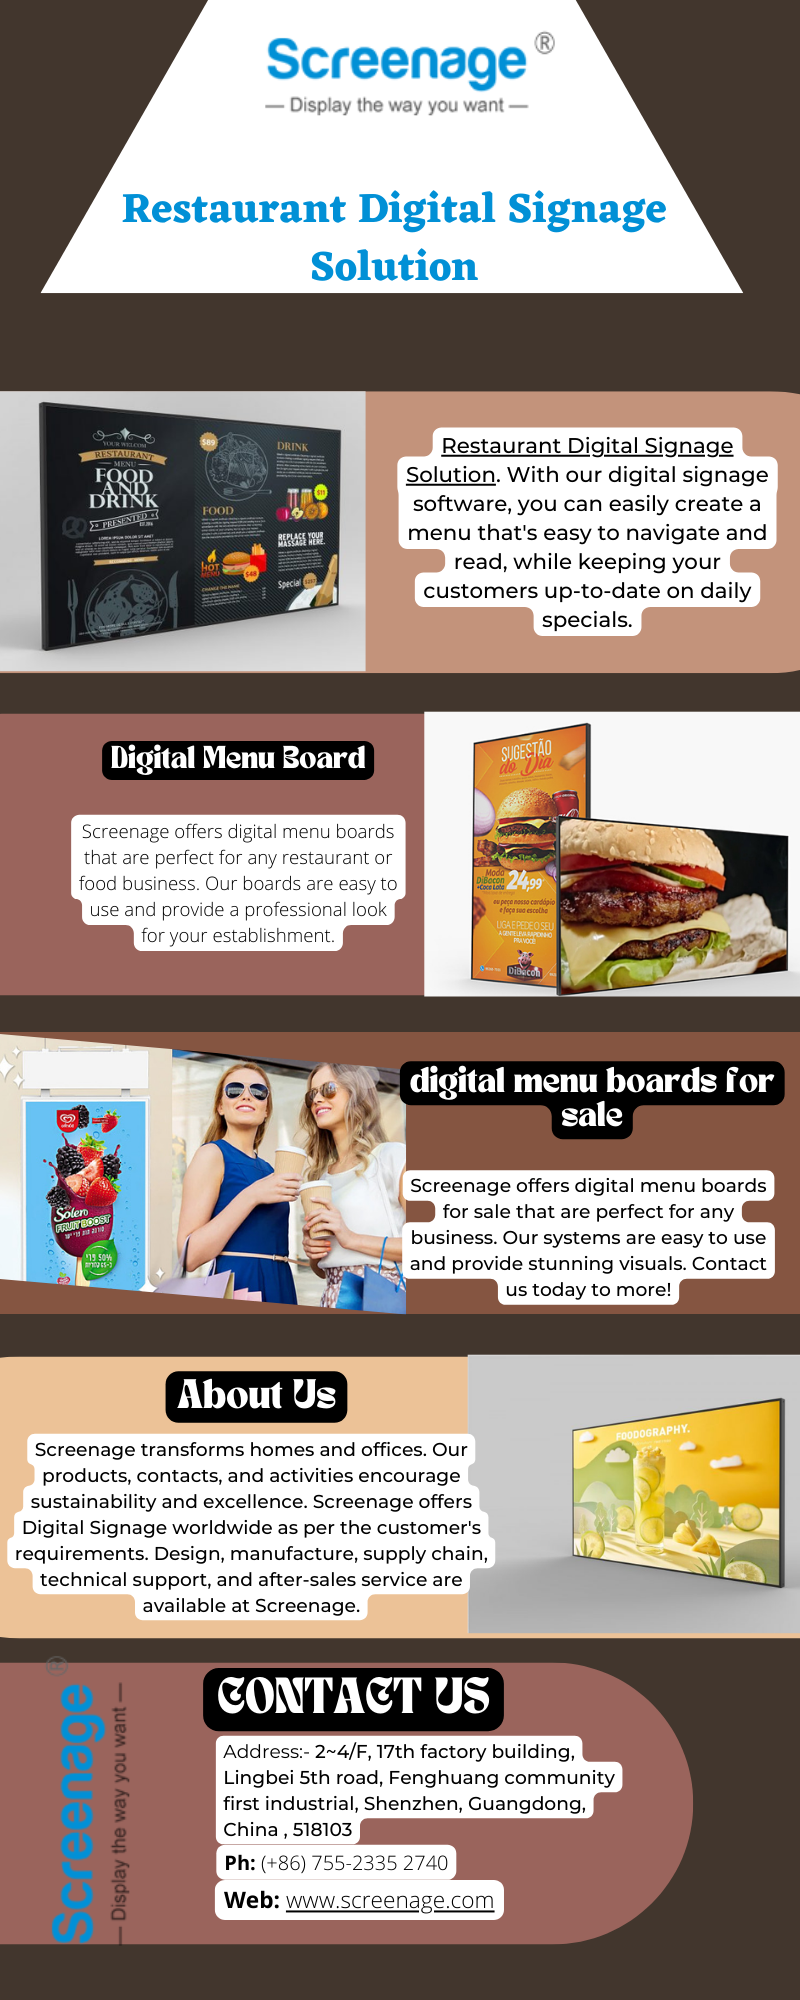 Digital Menu Boards for Sale